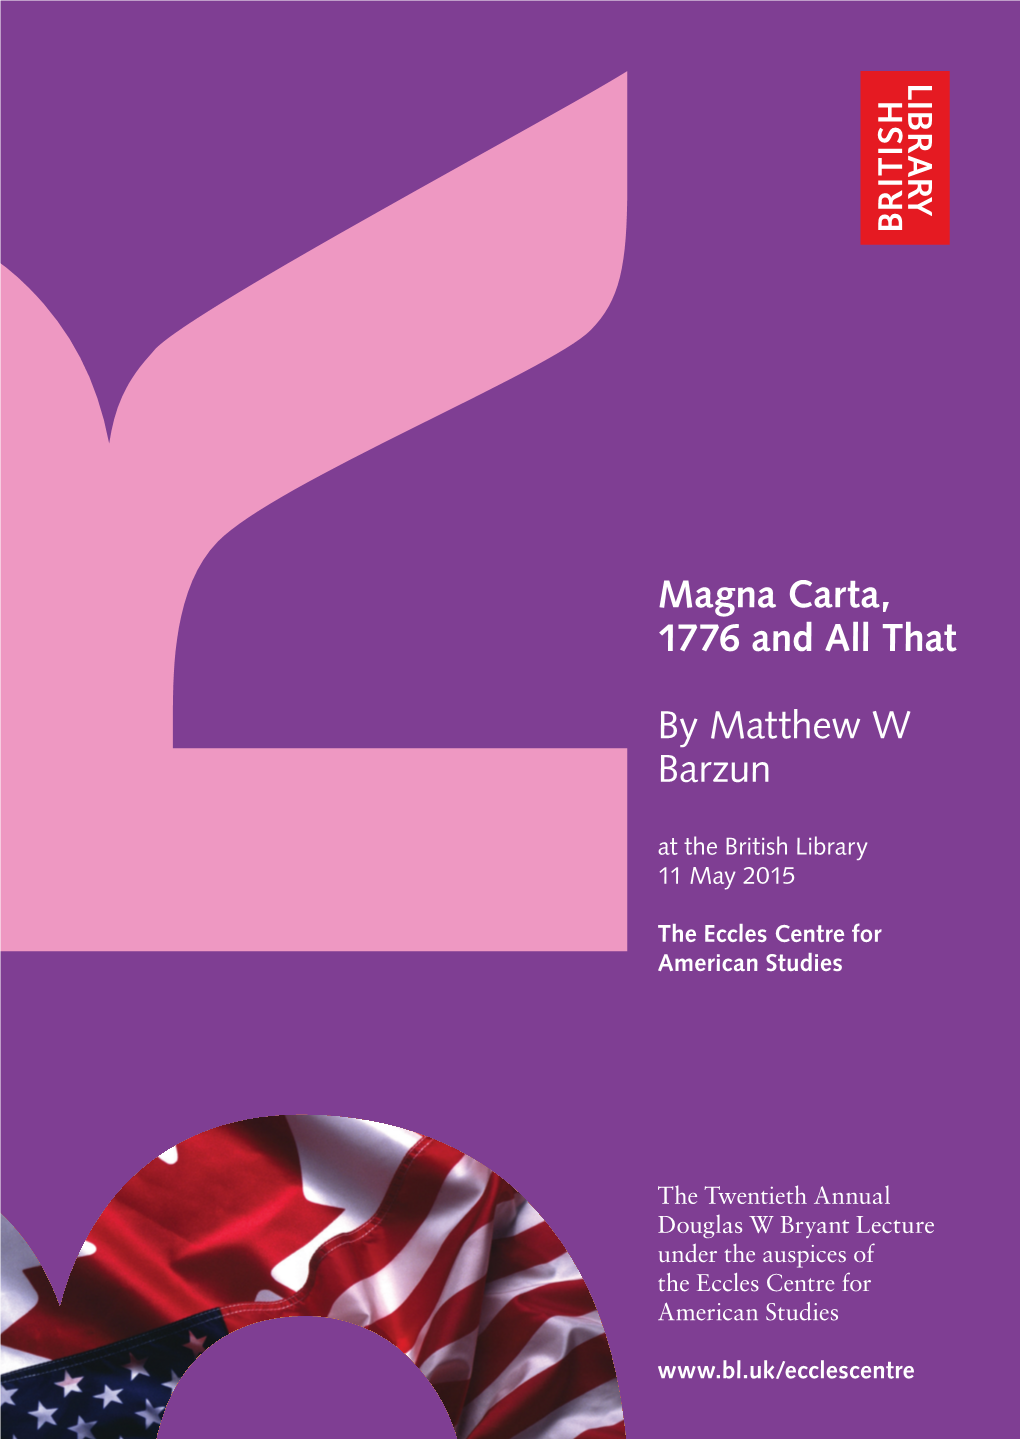 Magna Carta, 1776 and All That by Matthew W Barzun